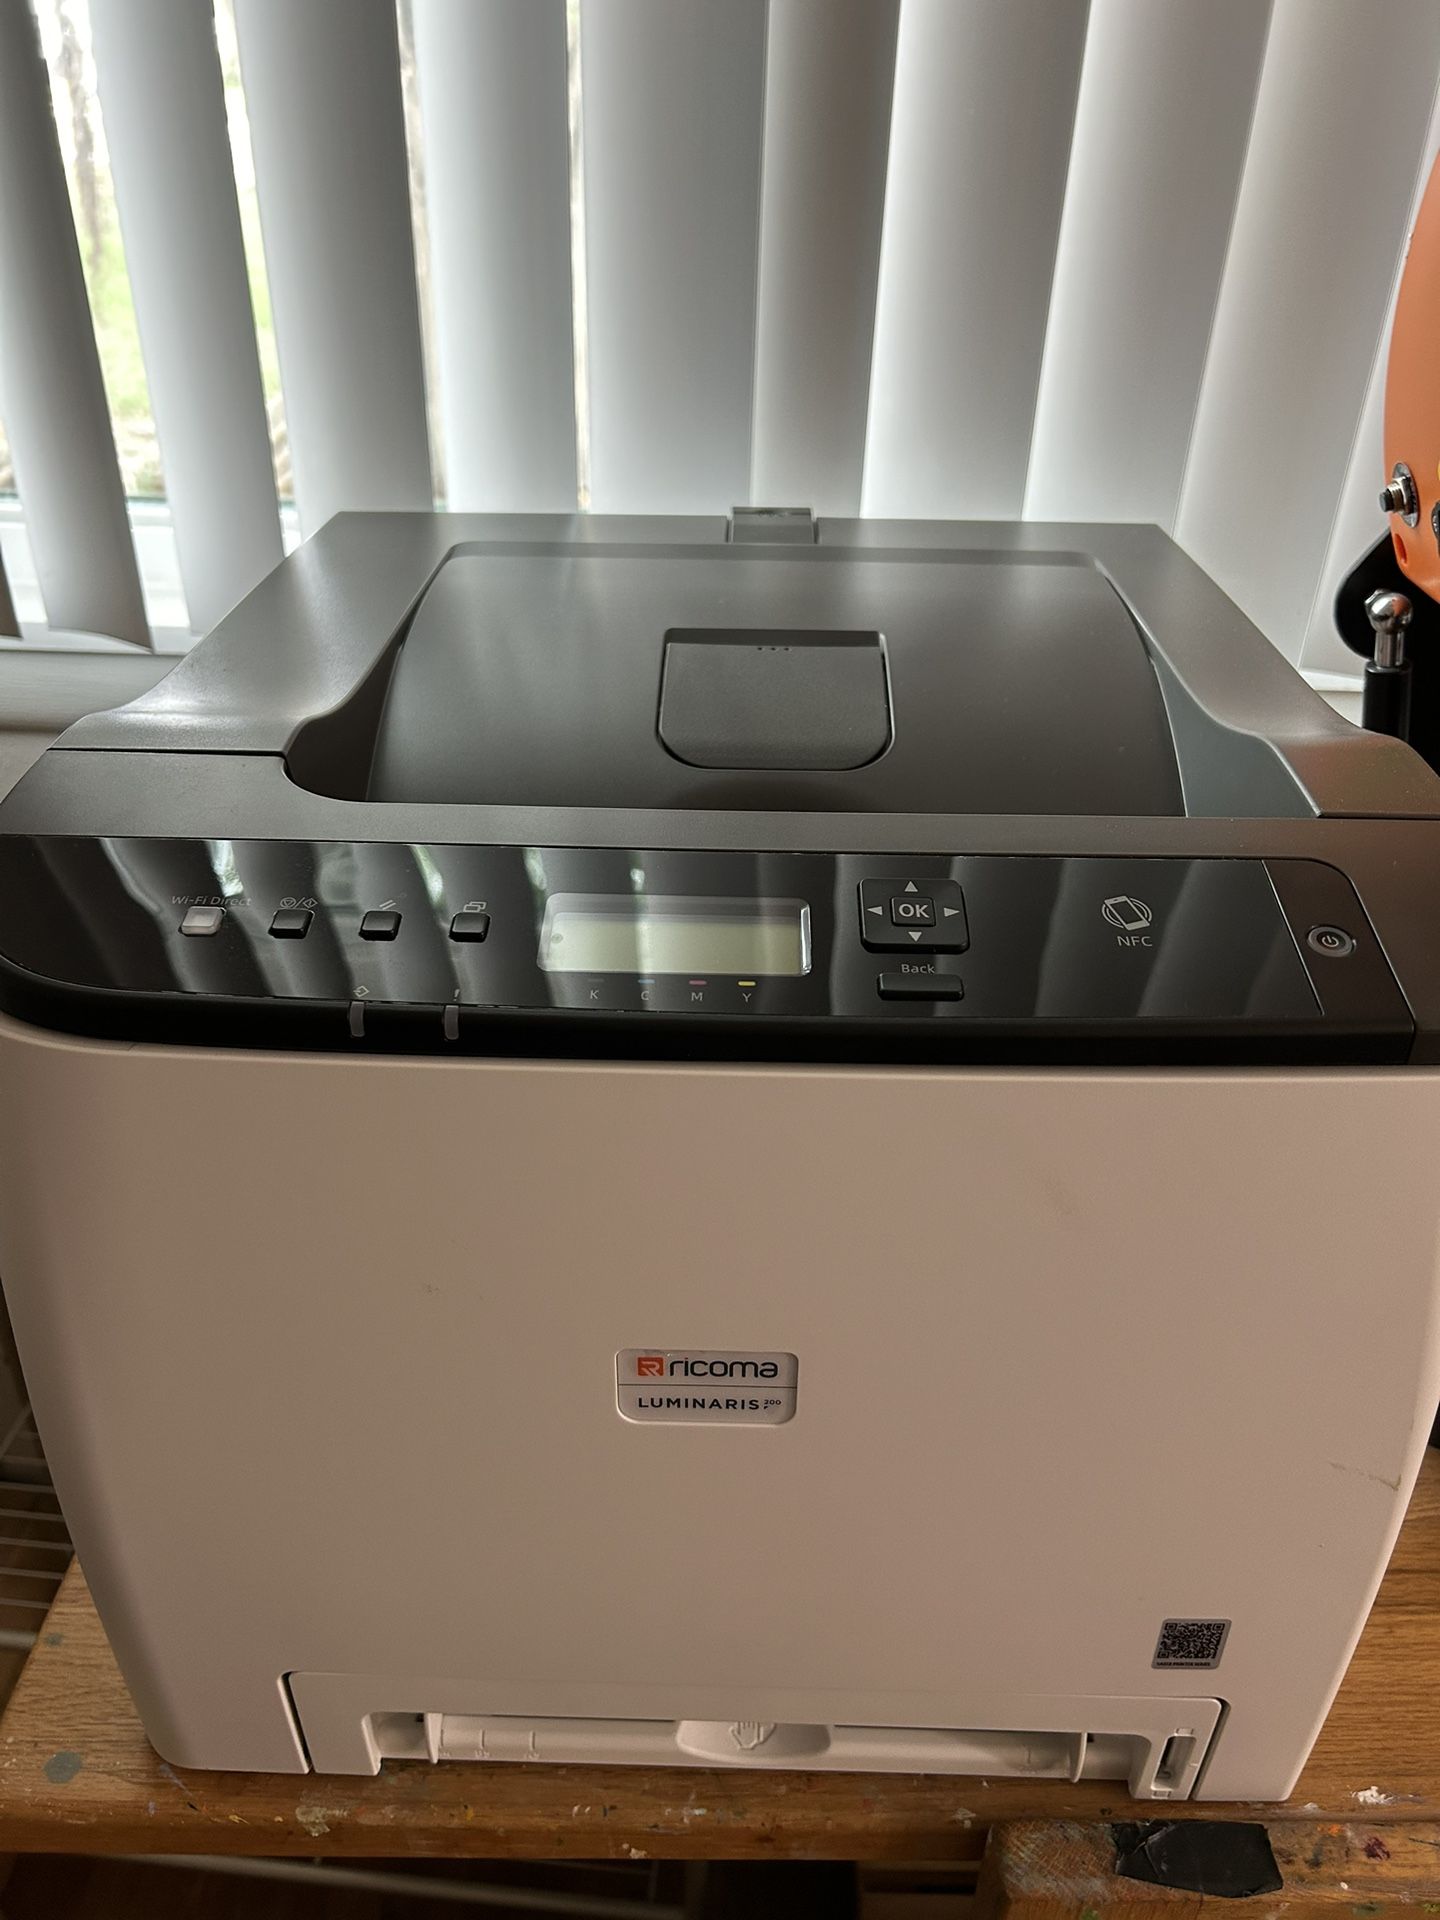 White Tóner Printer And Heat Press Bundle